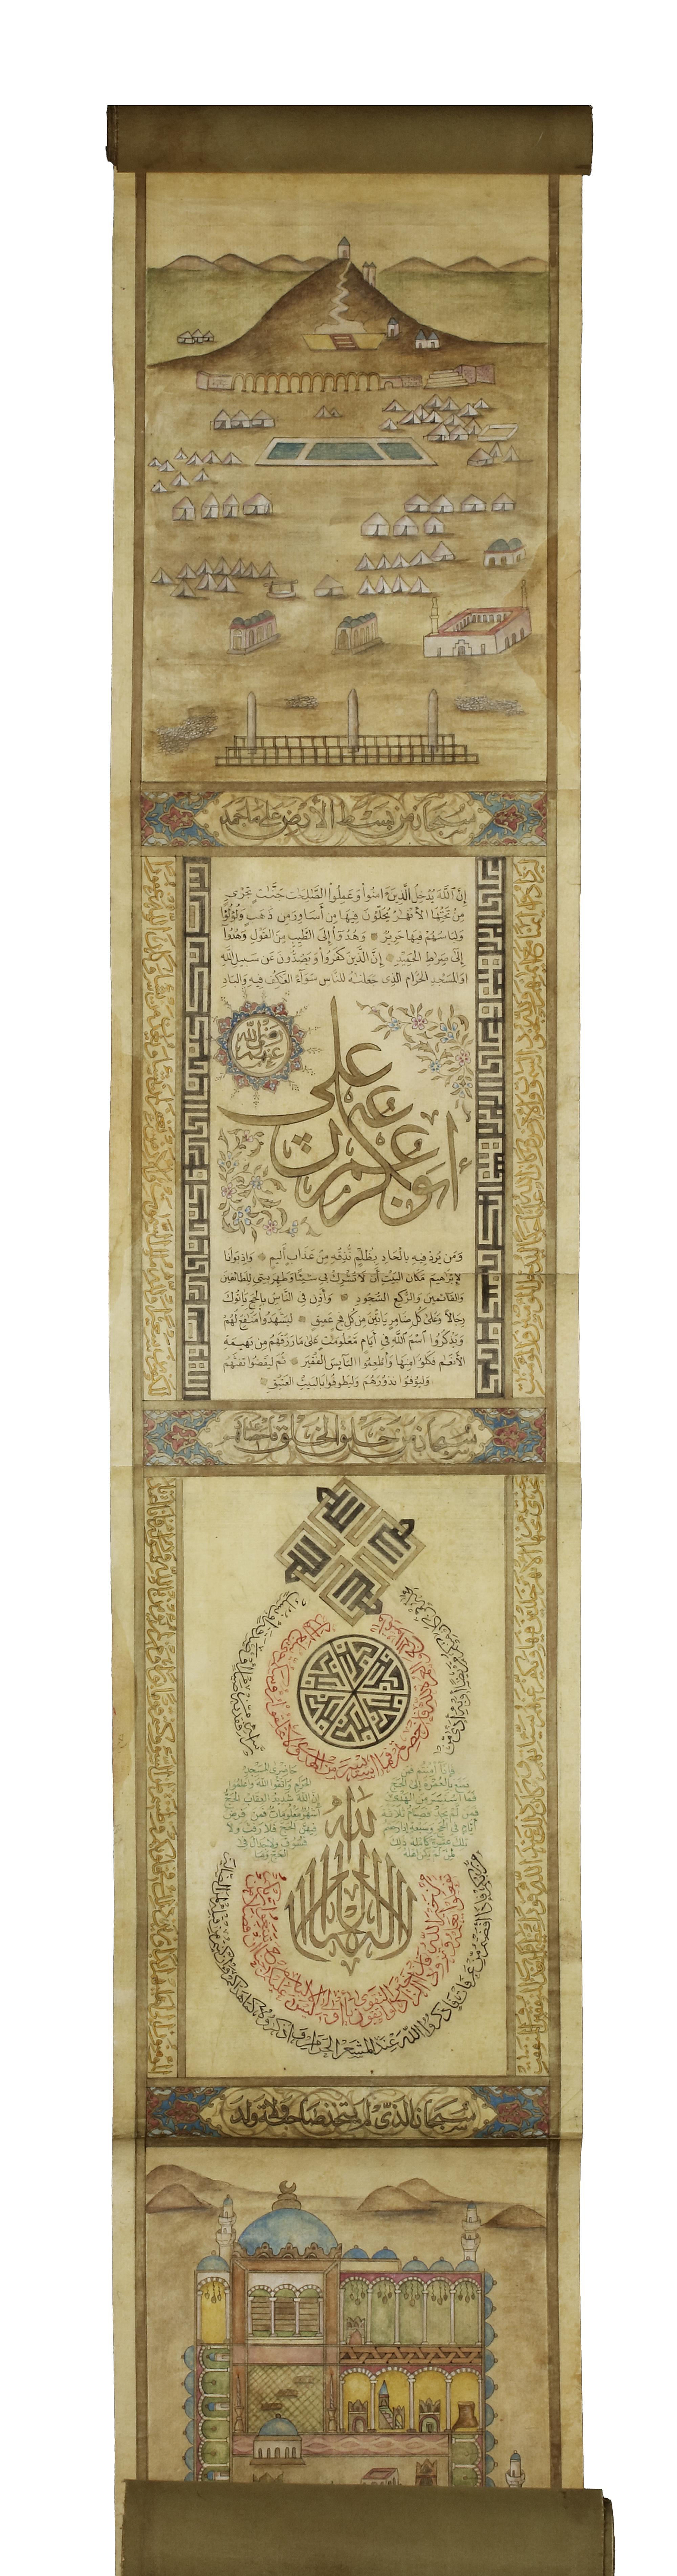 AN OTTOMAN ILLUMINATED HAJJ SCROLL, WRITTEN BY ISMAEL AHMED IN MECCA, DATED DHU HIJJA 1231 AH/1816 A - Image 8 of 12